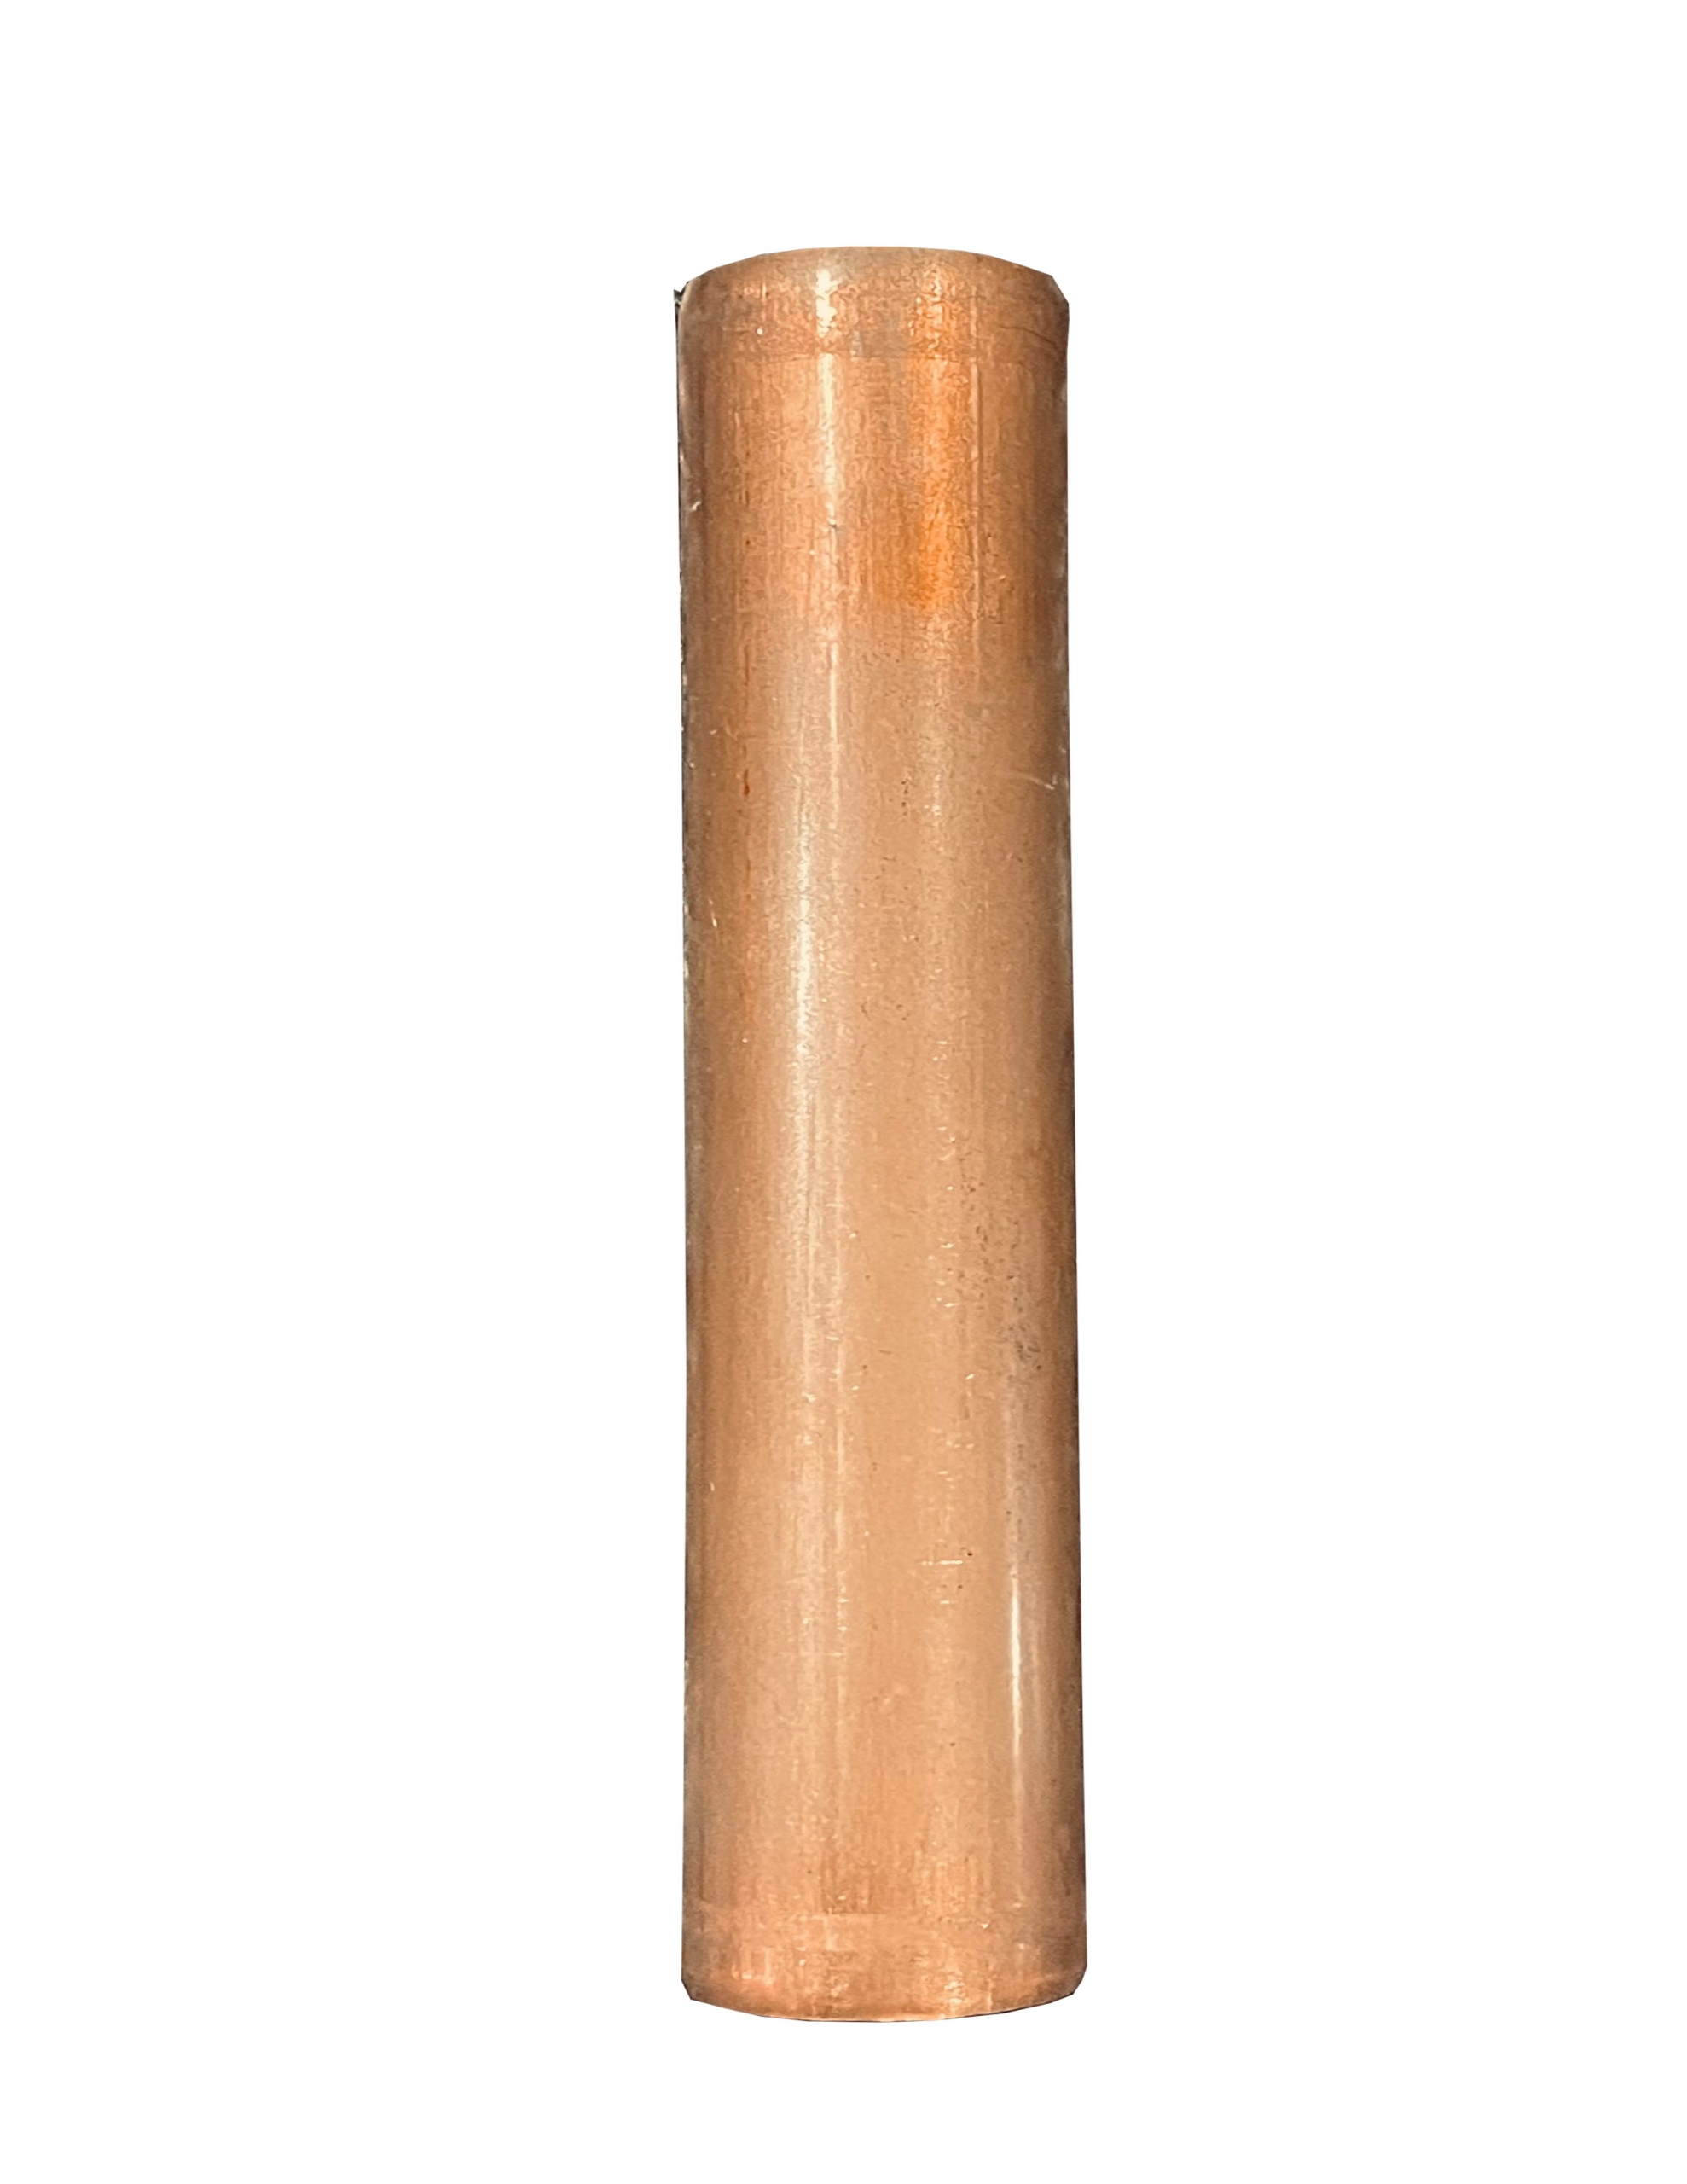 7"-12" Solid Copper Medium Sleeve (Raw or Aged Copper)